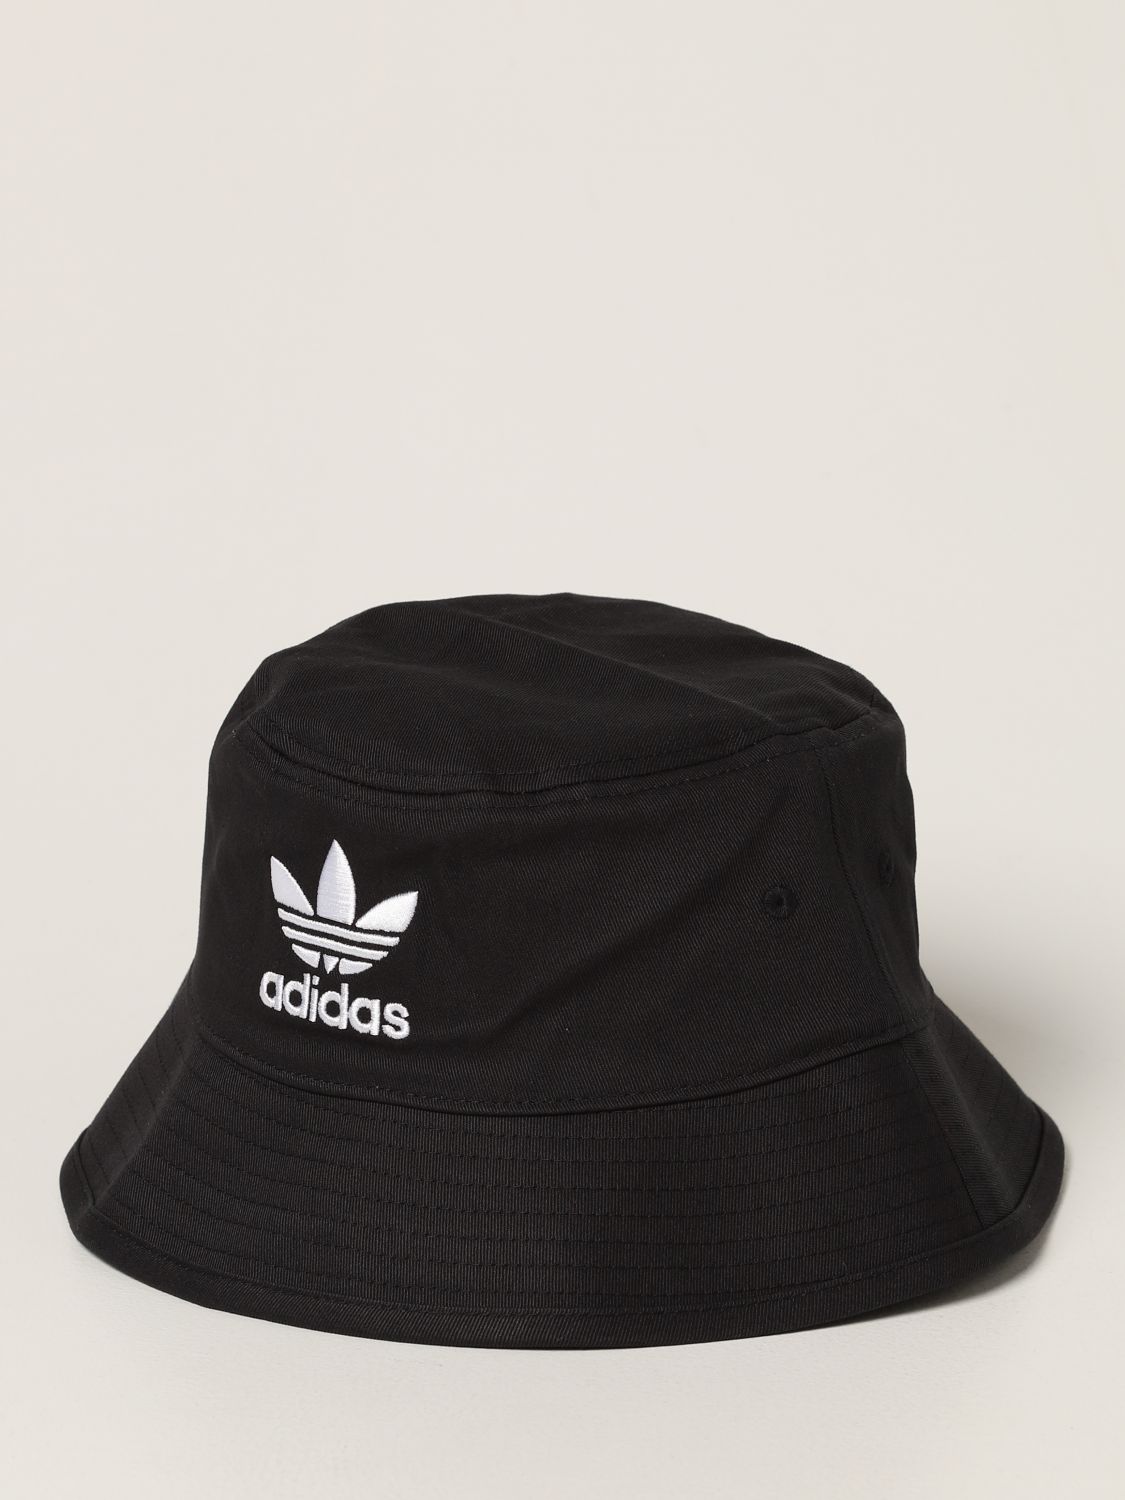 ADIDAS ORIGINALS: Bucket Hat - Black | Adidas Originals hat AJ8995 ...